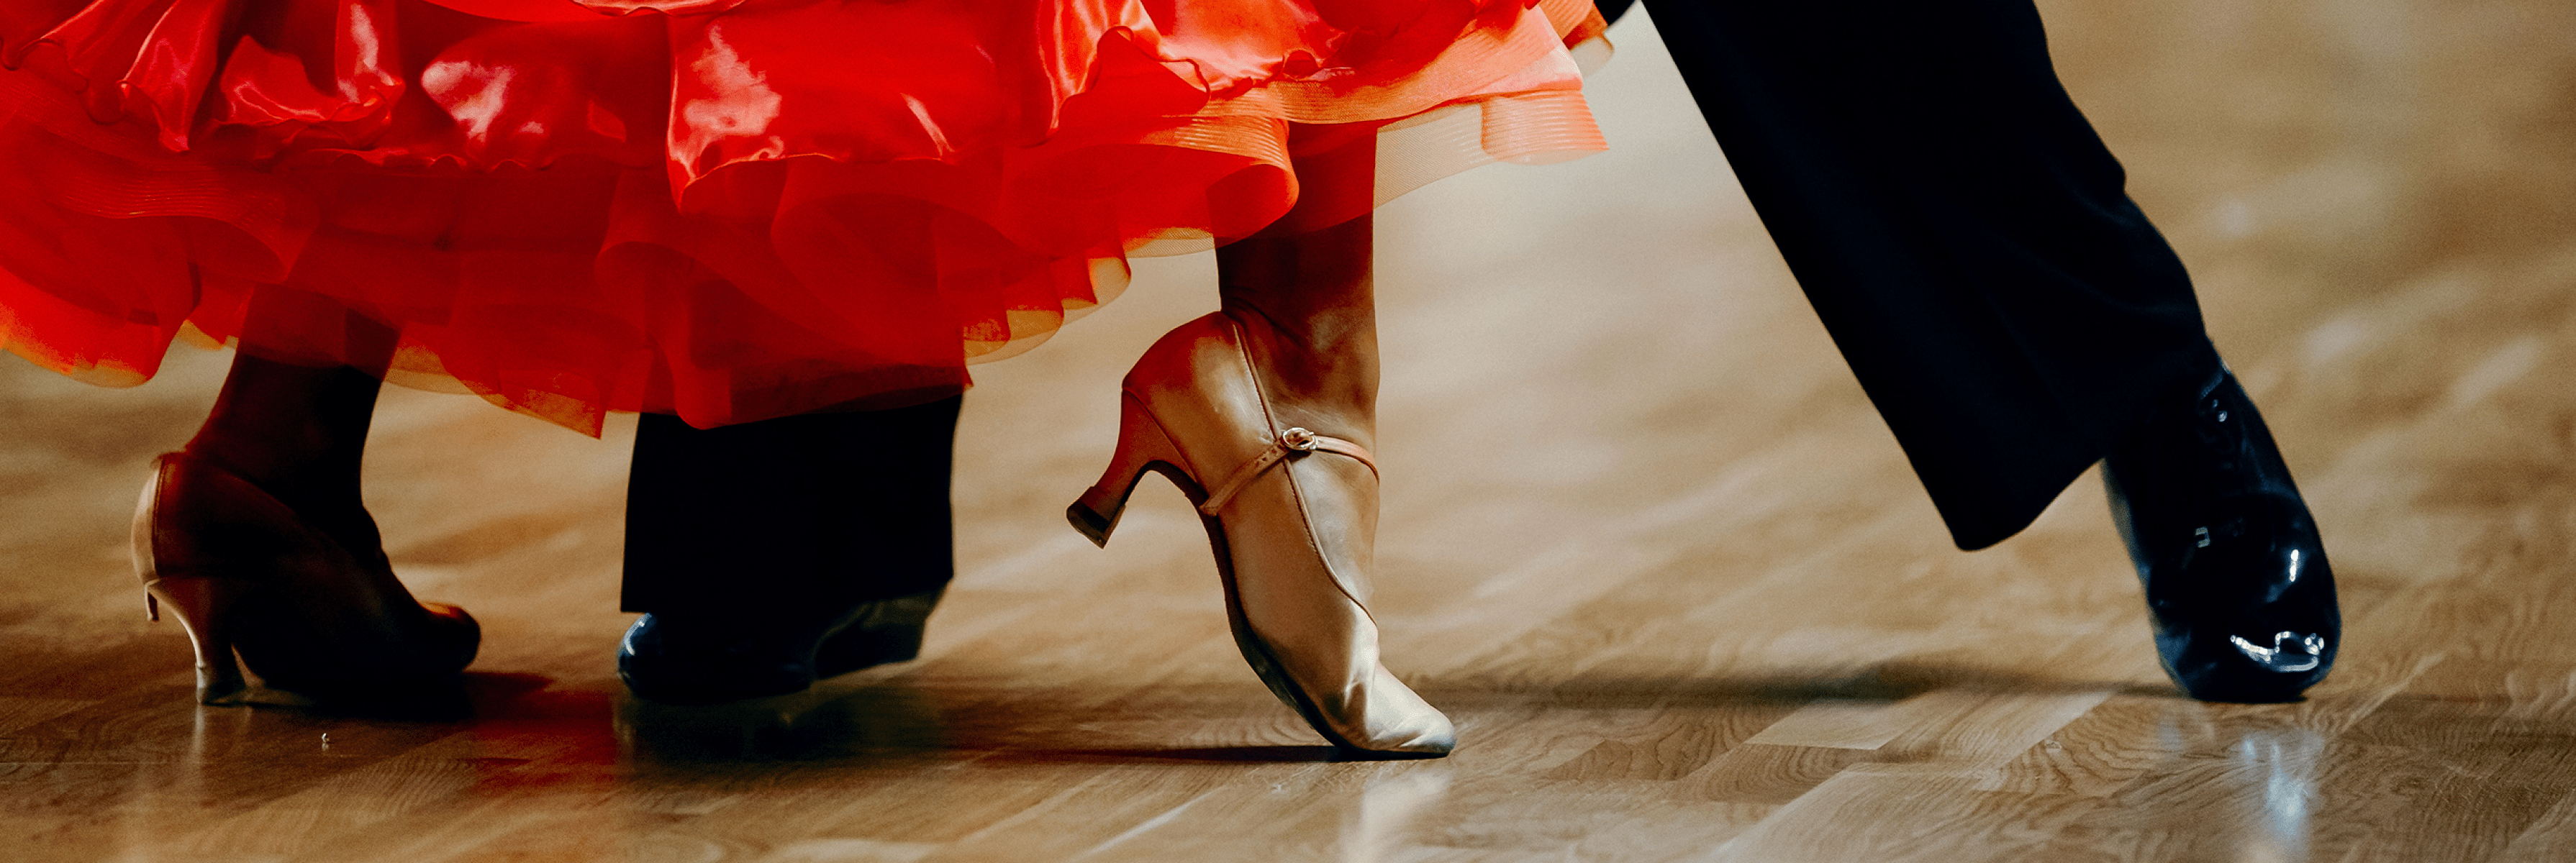 Man and woman feet dancing 